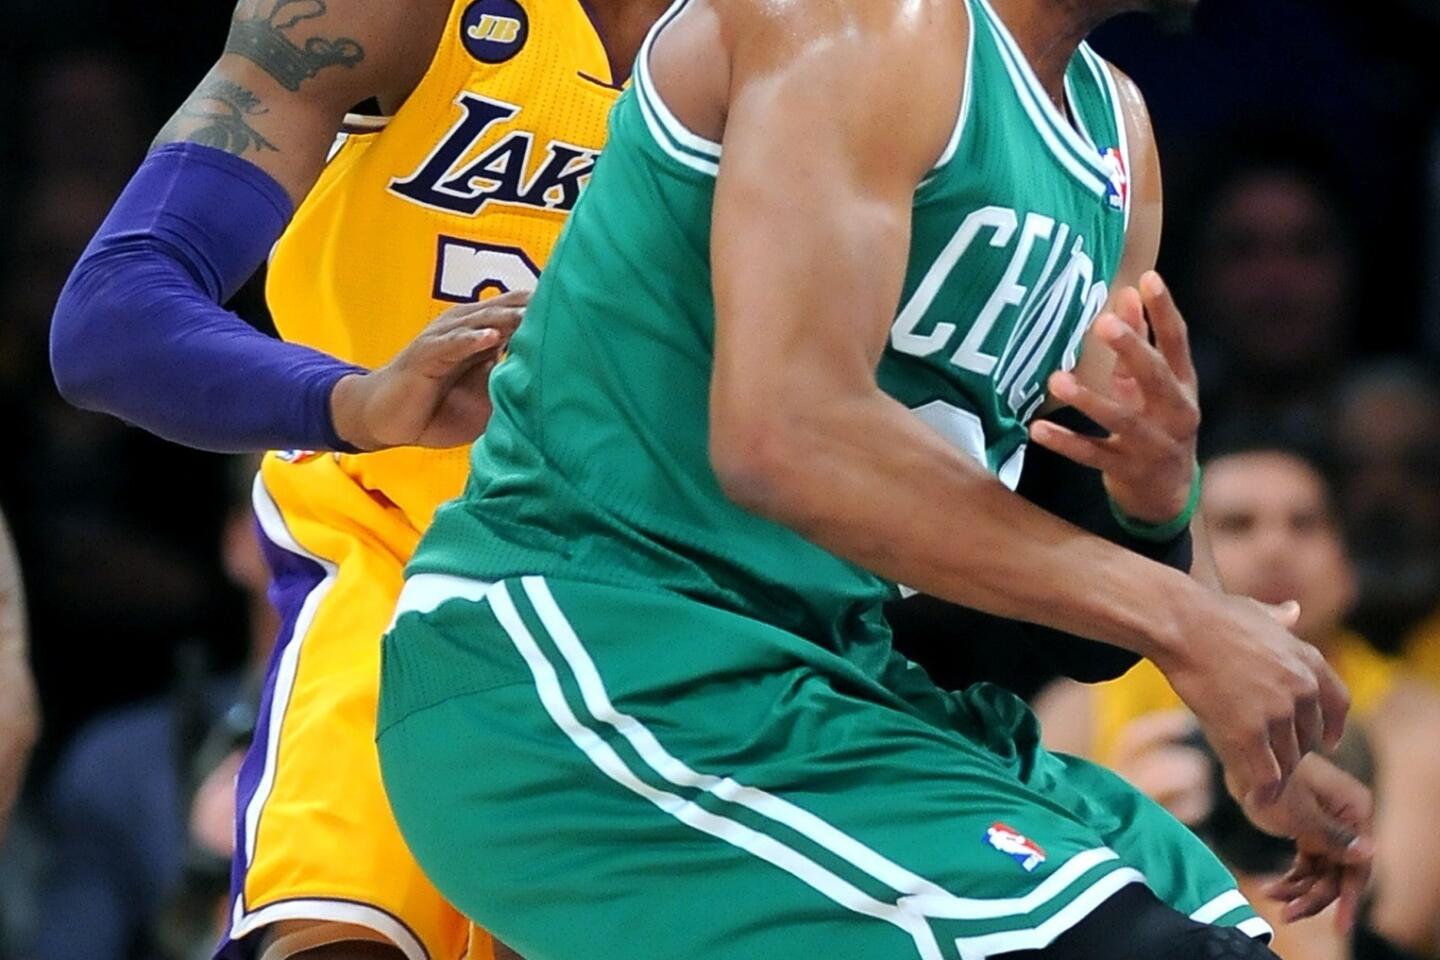 Lakers News: Giannis Antetokounmpo Thanks Kobe Bryant After